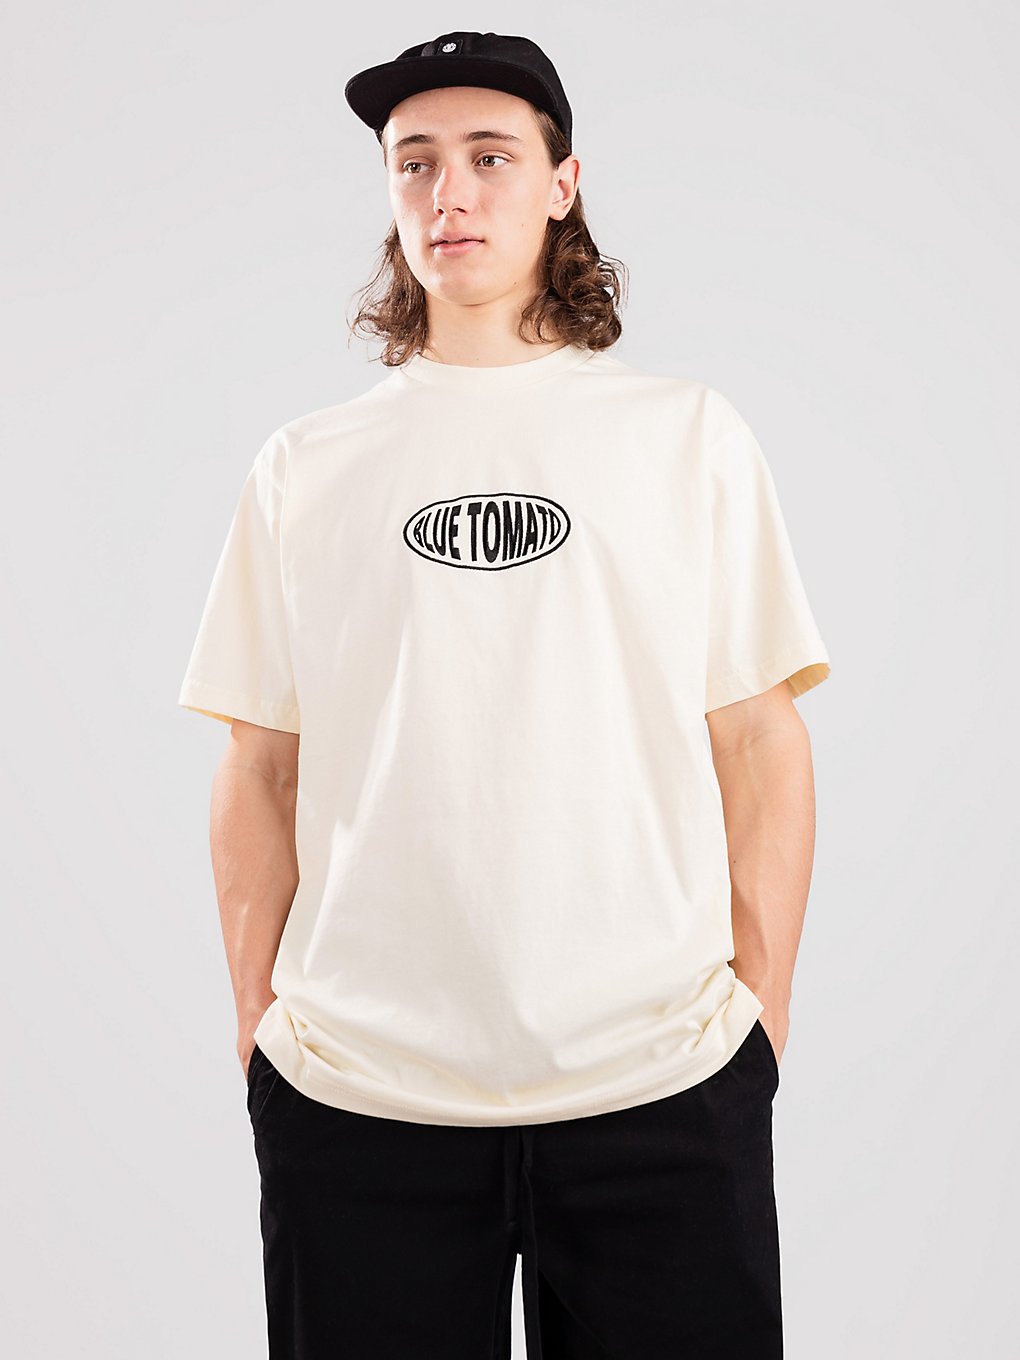 Blue Tomato Logo T-Shirt off white kaufen